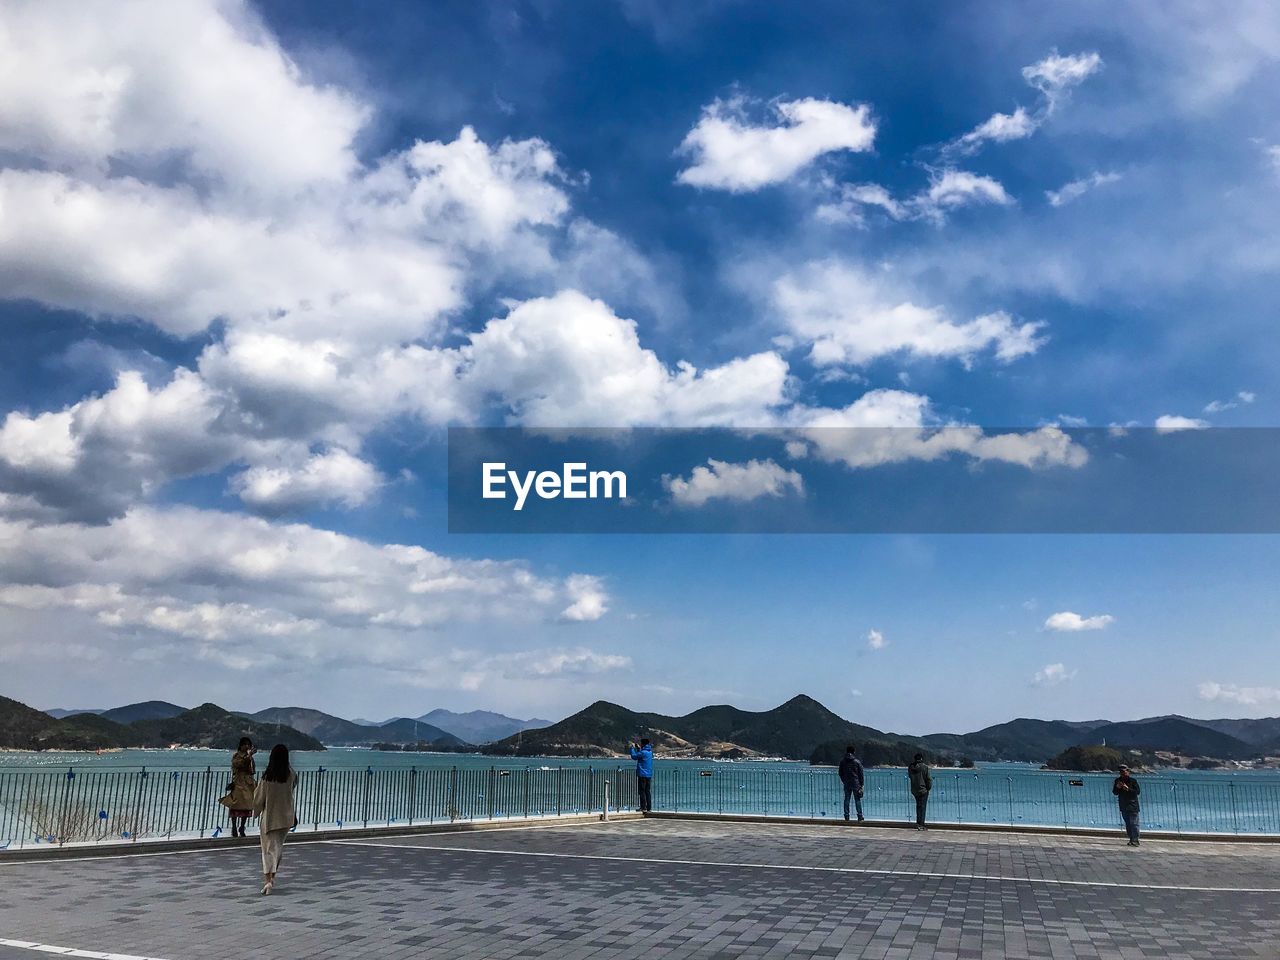 People relaxing on pier against sky